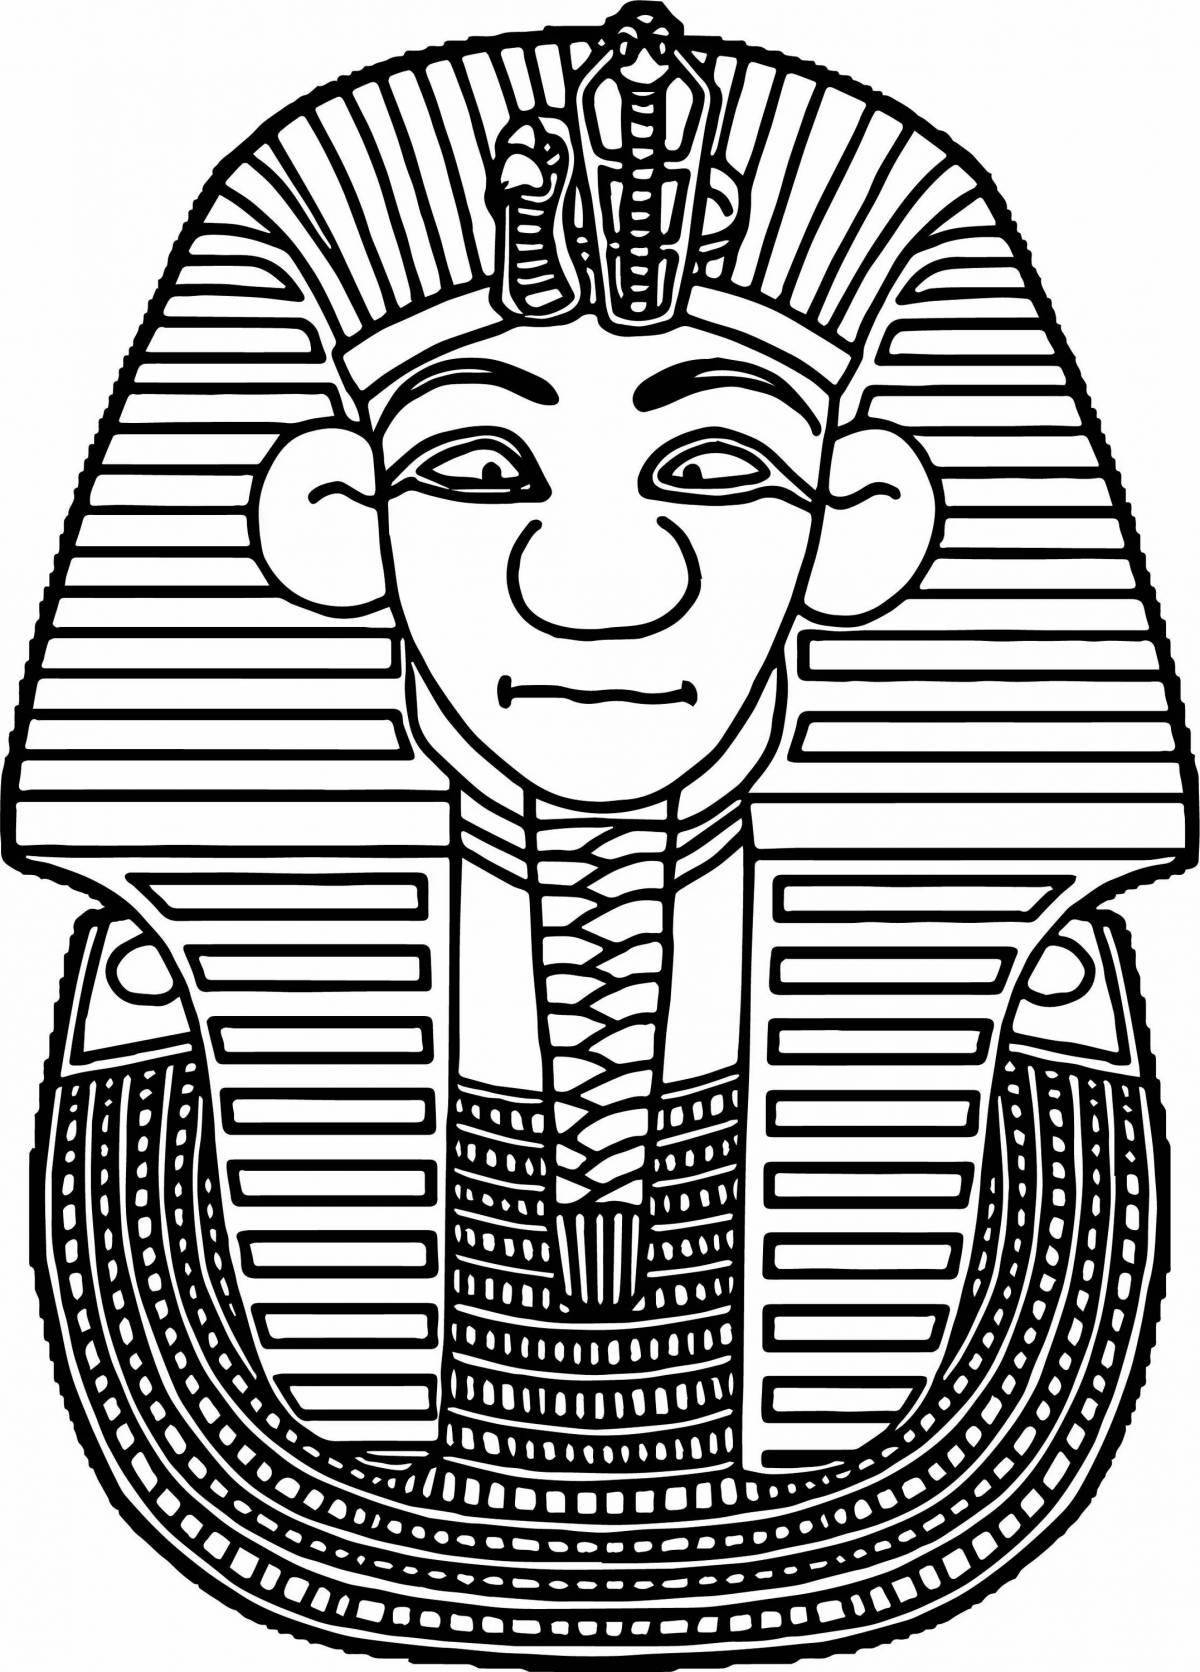 Coloring page awesome pharaoh tutankhamun mask